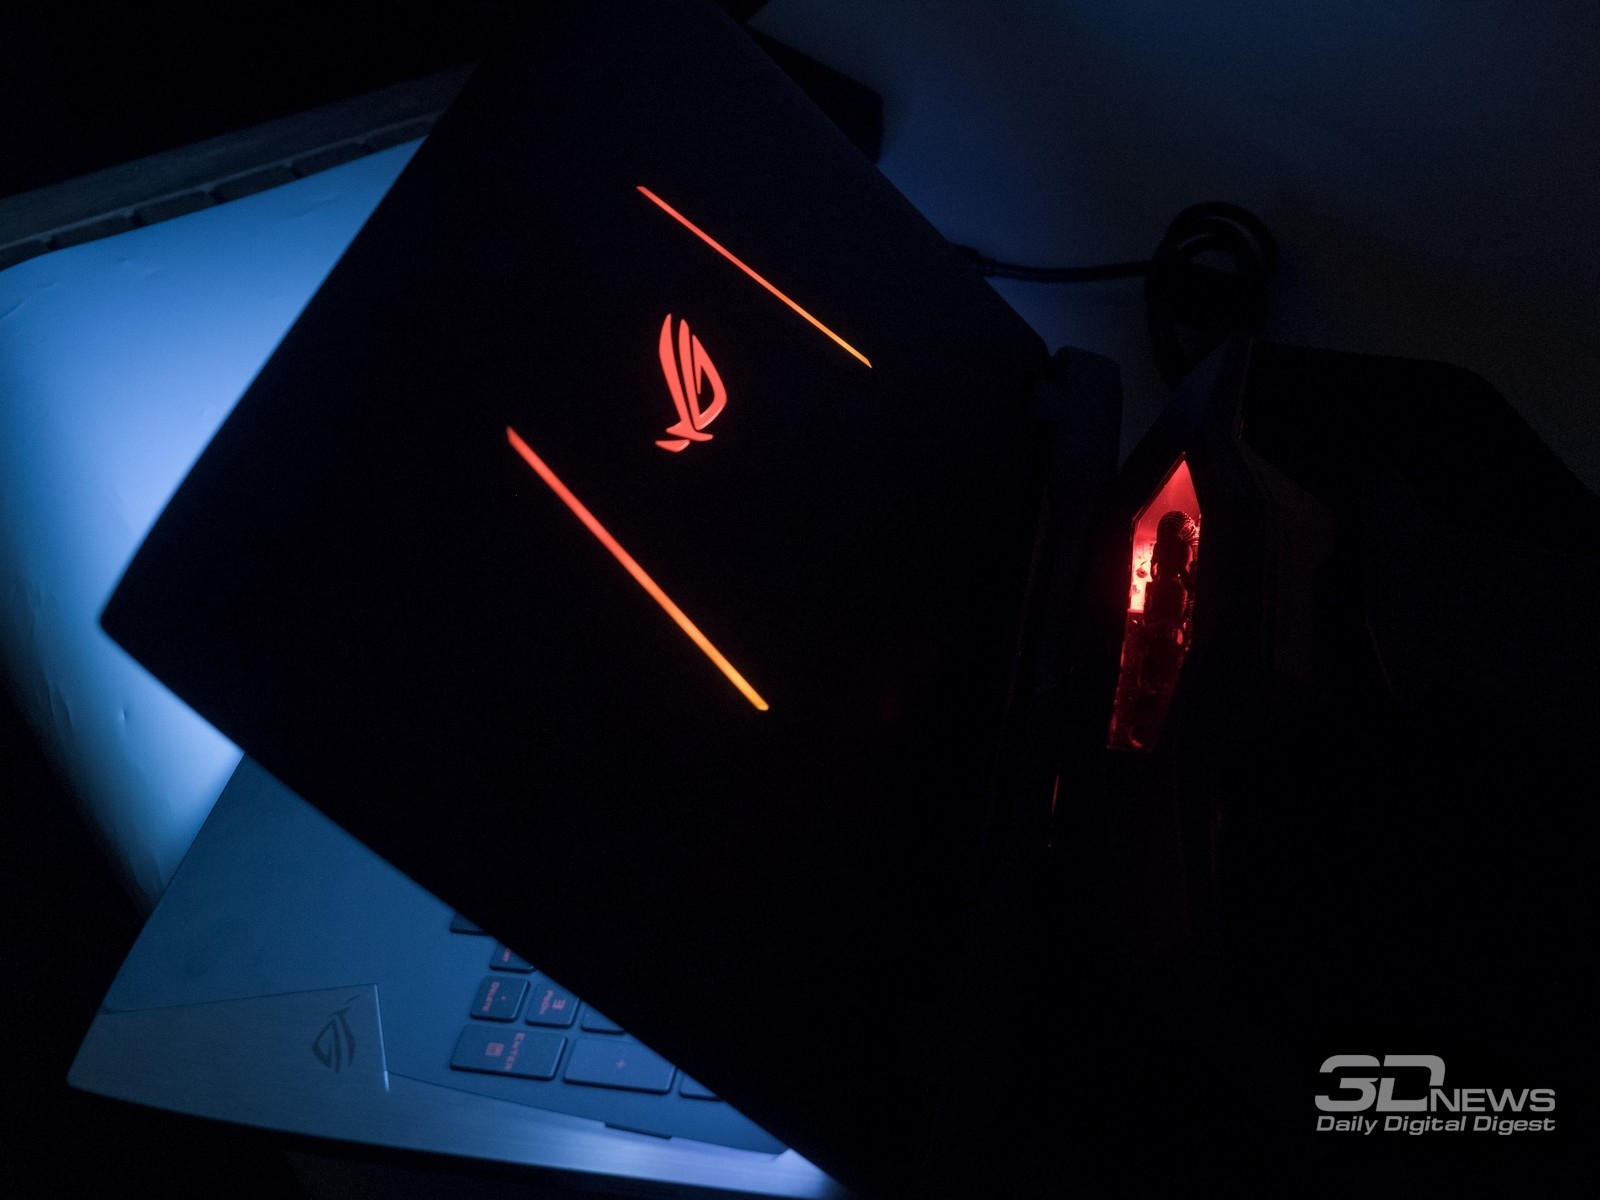 Подсветка на ноутбуке ardor gaming. Ноутбук ASUS ROG подсветка. Ноутбук ASUS игровой с красной подсветкой. Асус игровой ноутбук с подсветкой красный. Асус ноутбук игровой 2020 с подсветкой.